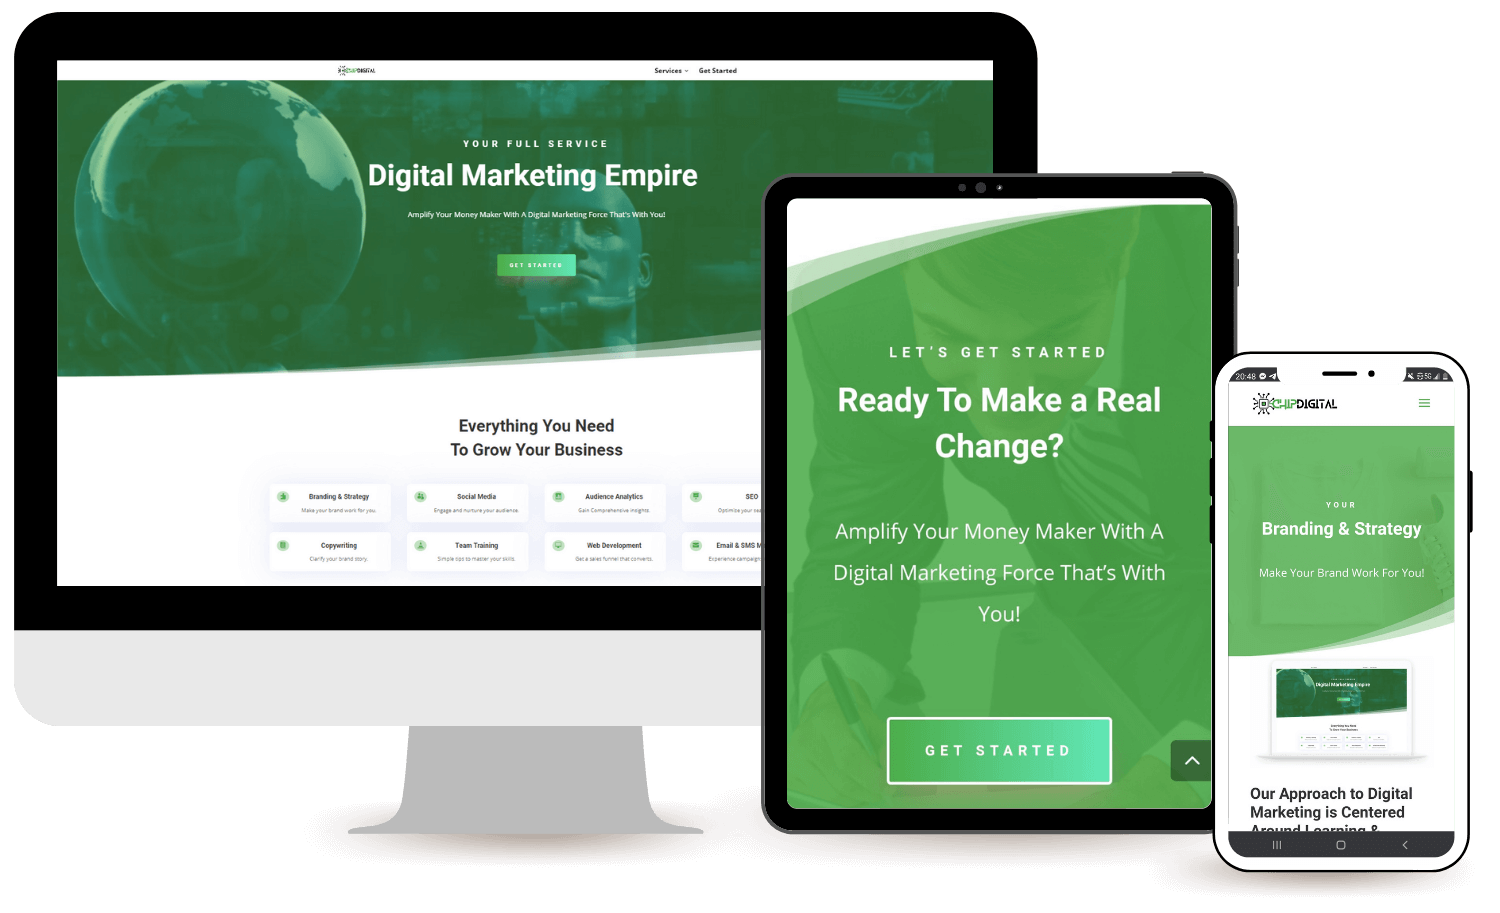 CHIP-DIGITAL-Your-Full-Service-Digital-Marketing-Empire-Copyriting Graphic